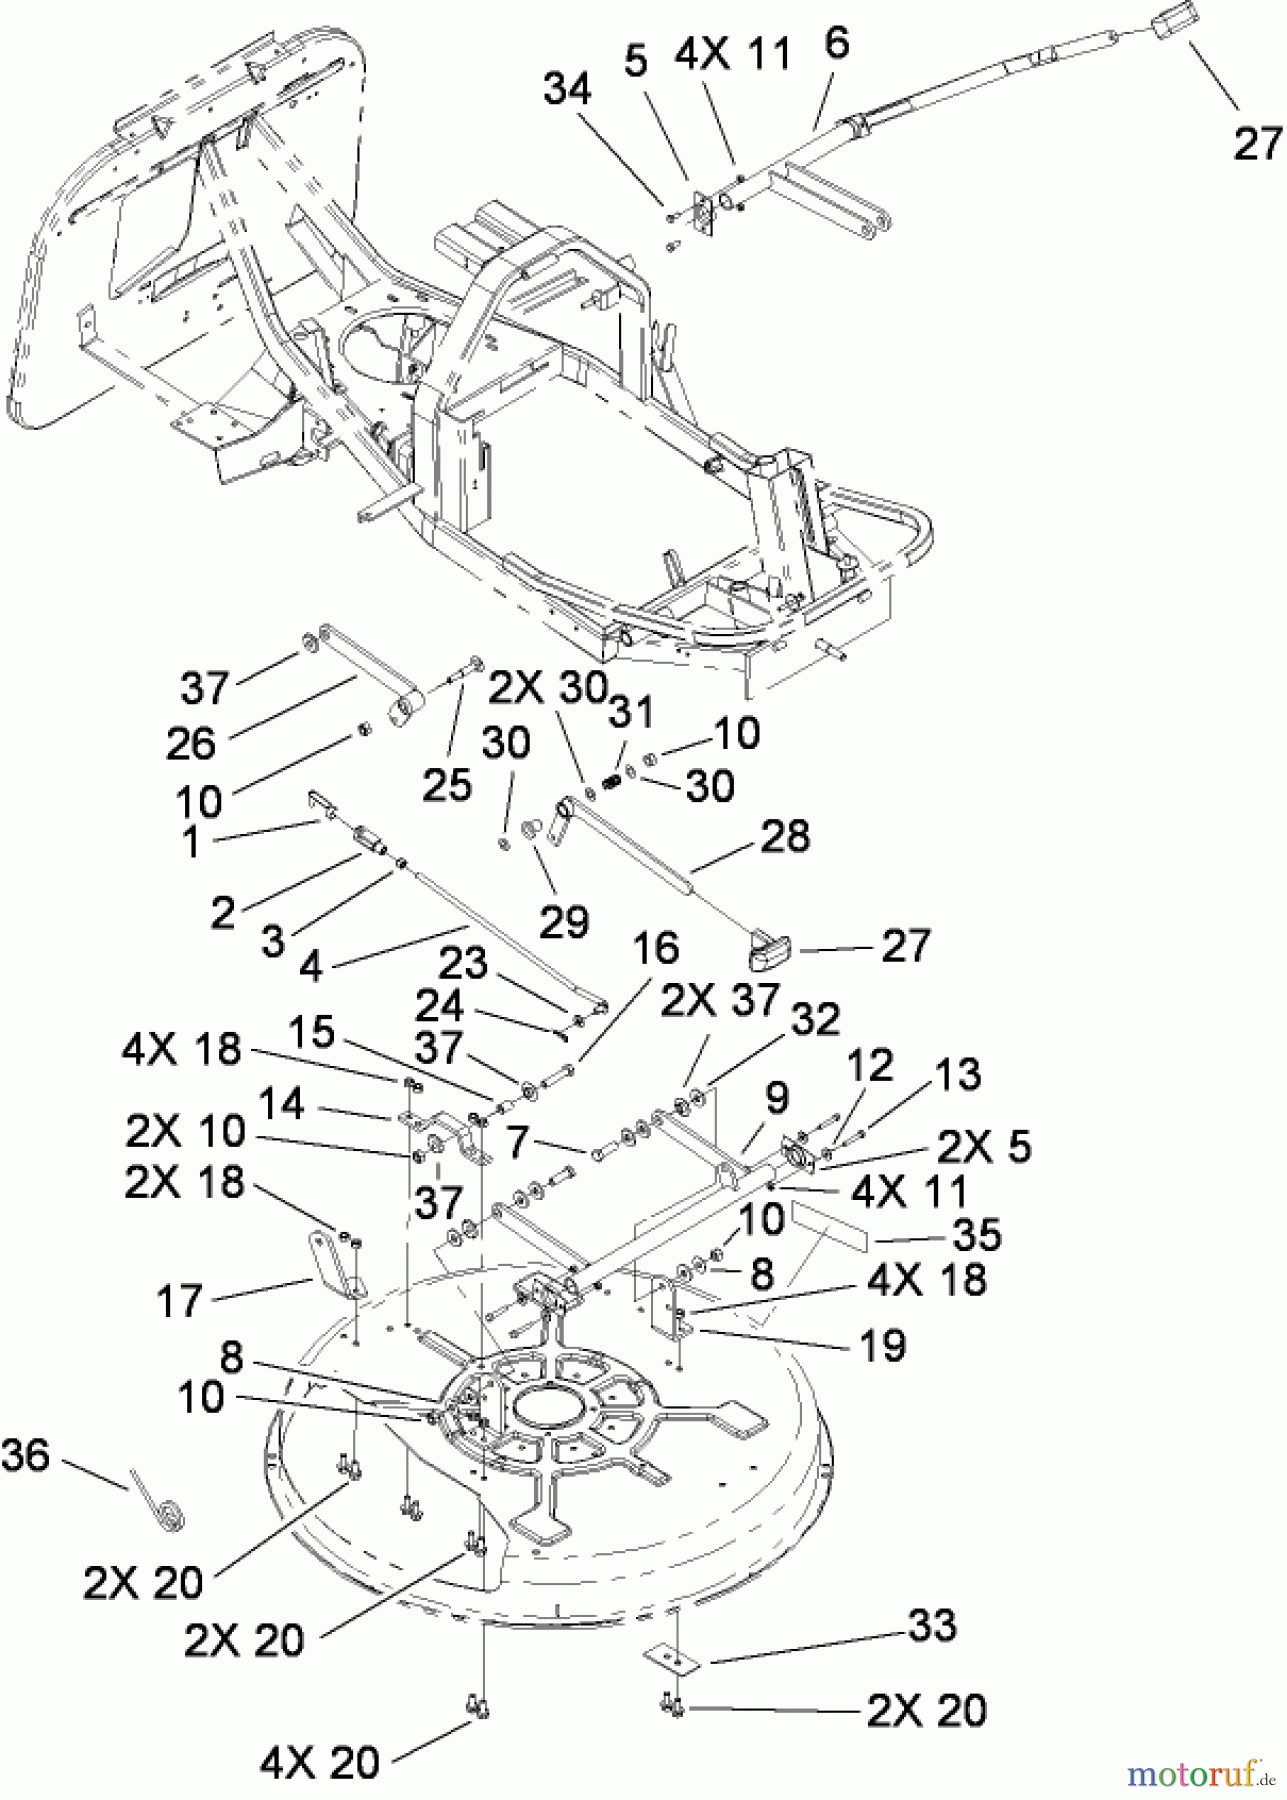  Toro Neu Mowers, Rear-Engine Rider 70185 (G132) - Toro G132 Rear-Engine Riding Mower, 2008 (270805706-280899564) DECK SUSPENSION ASSEMBLY